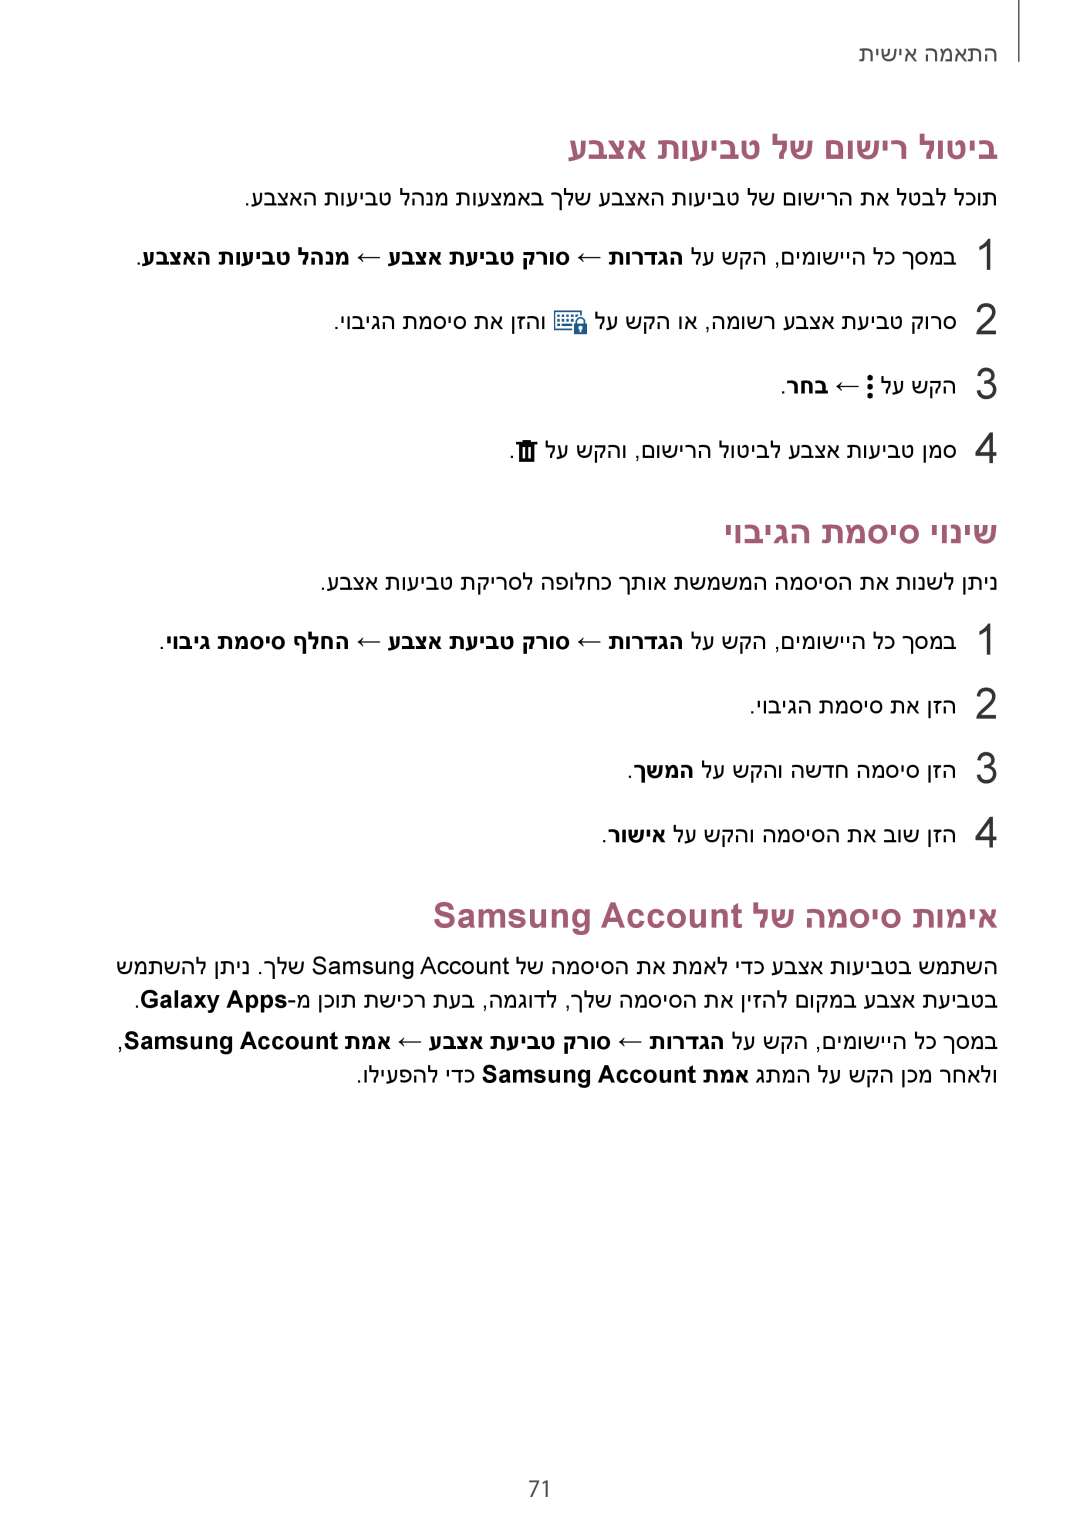 Samsung SM-N910FZWEAUT manual עבצא תועיבט לש םושיר לוטיב, יוביגה תמסיס יוניש, Samsung Account לש המסיס תומיא, התאמה אישית 